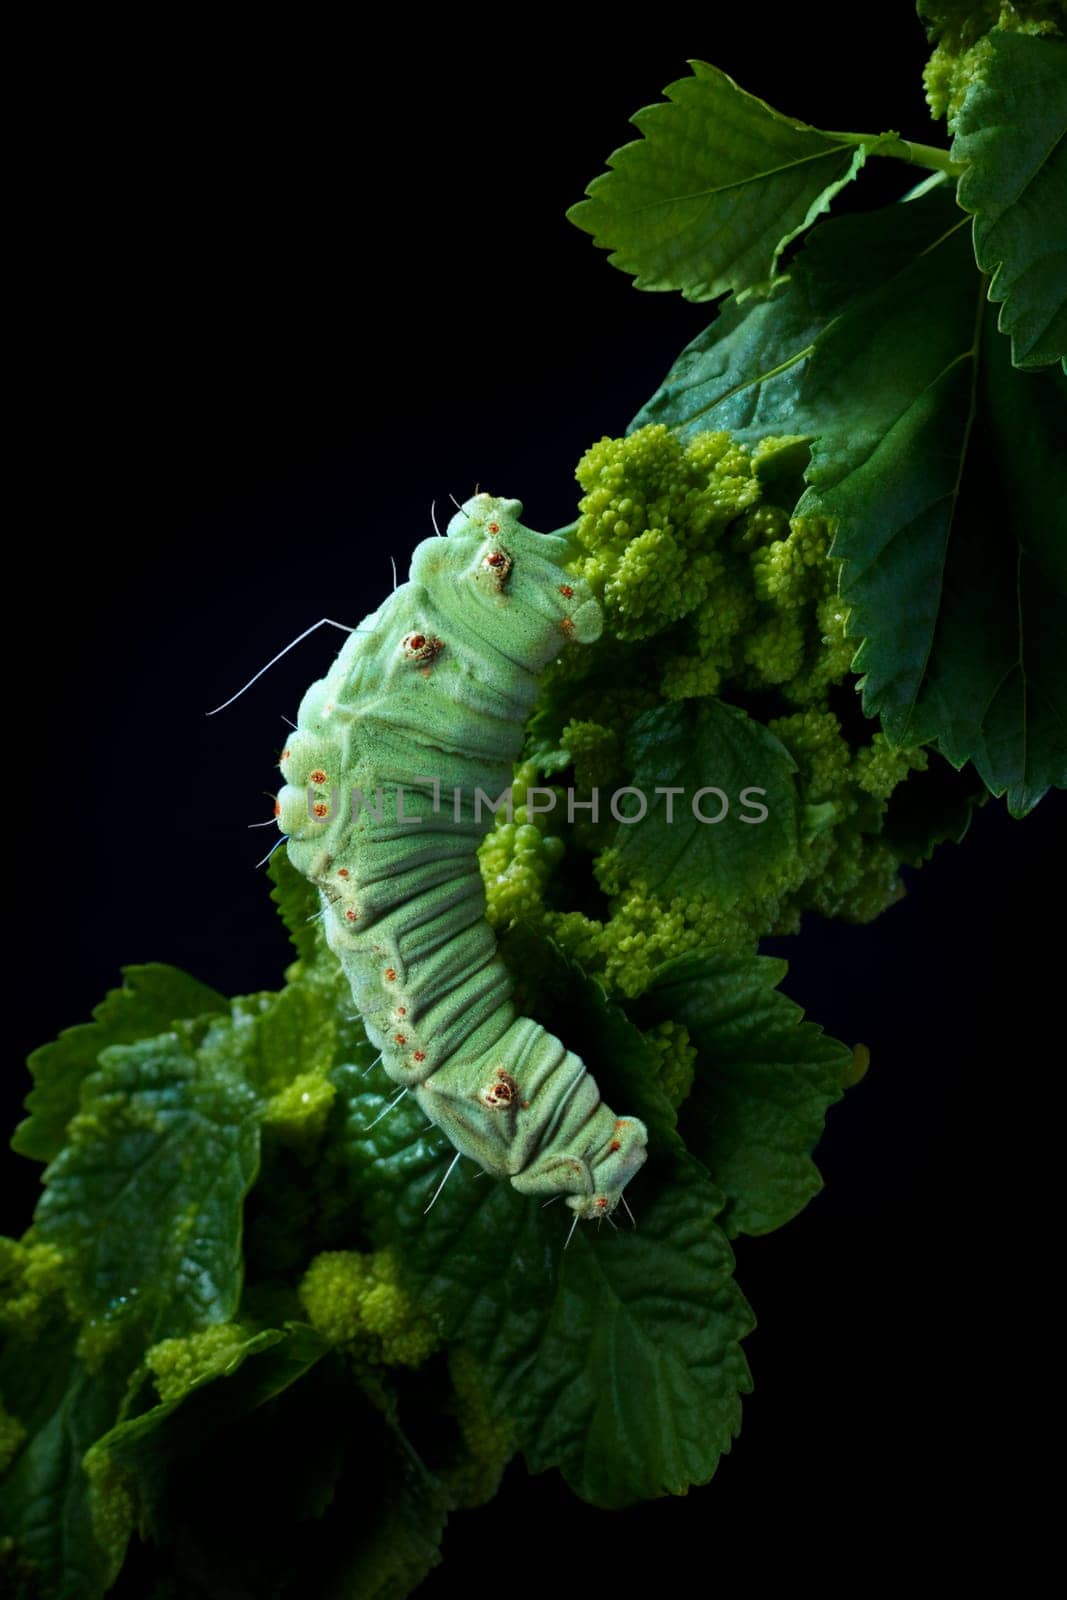 caterpillar on leaves in the garden. Selective focus. by yanadjana